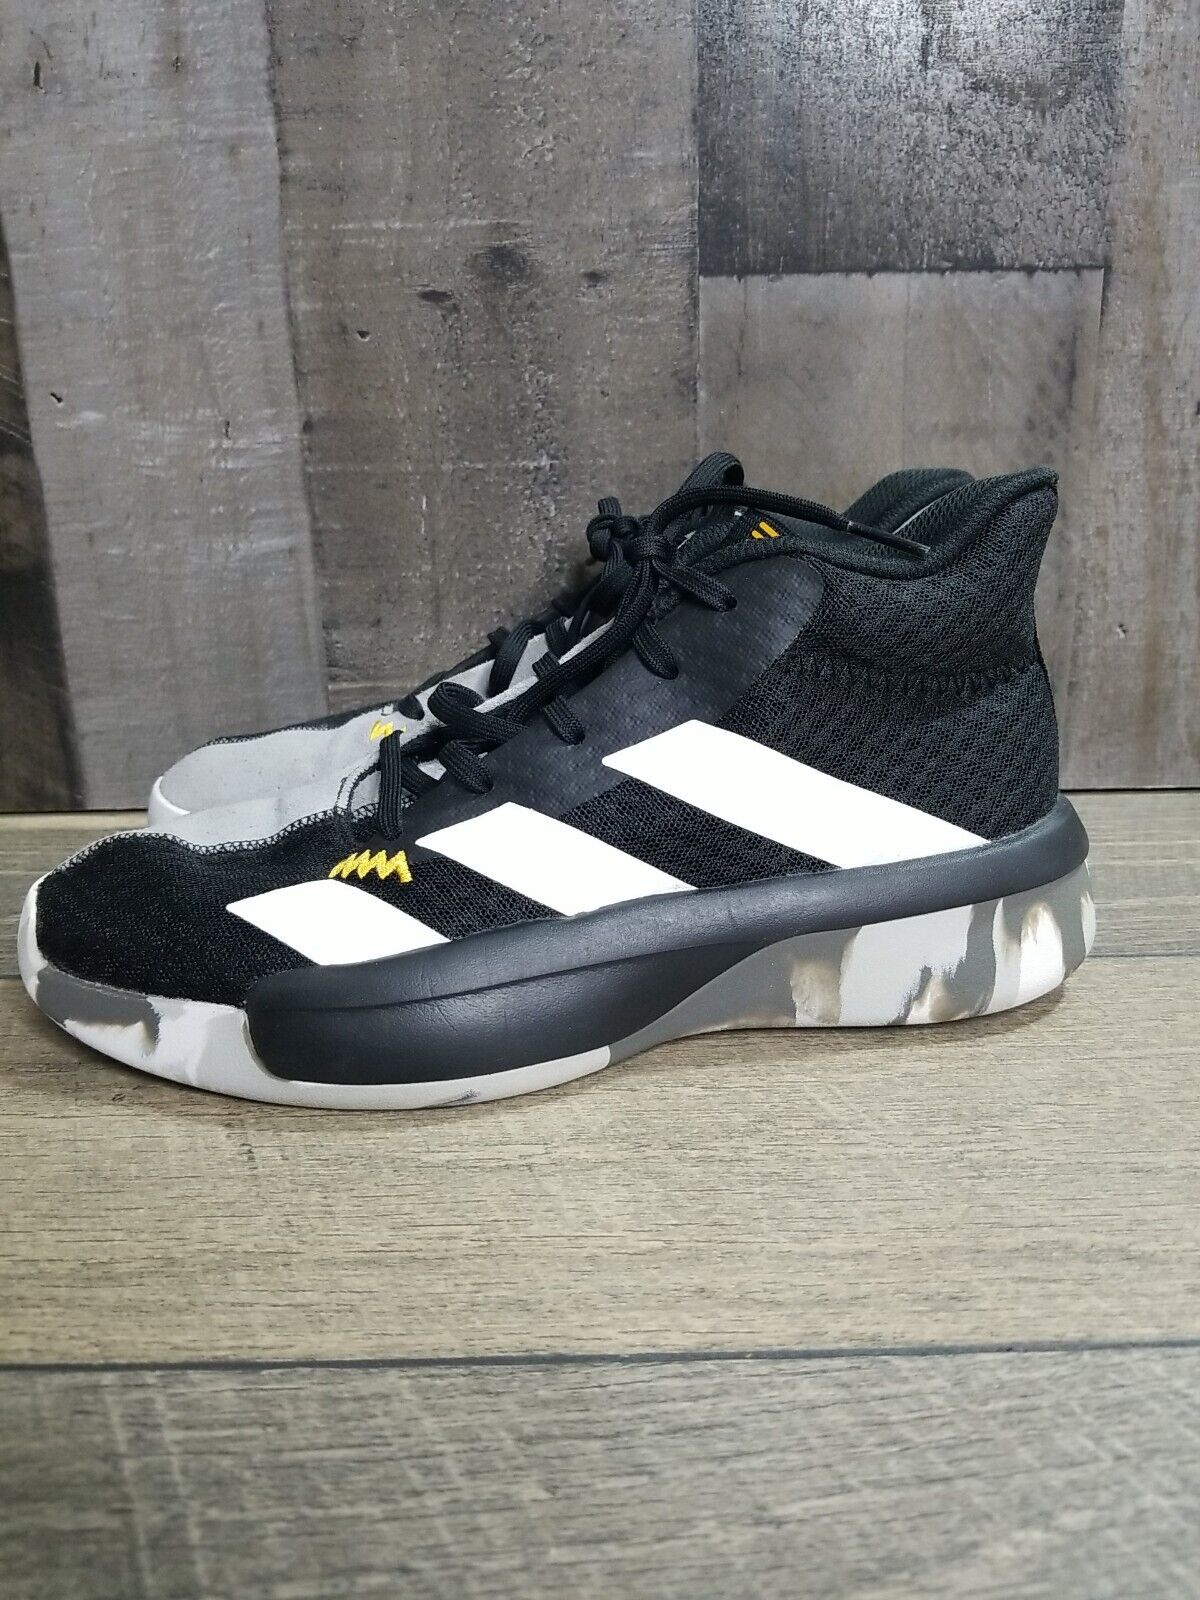 depart plot Saving Adidas Pro Next 2019 Mid Top Basketball Shoes Size 6 Black White Gold Camo  | eBay